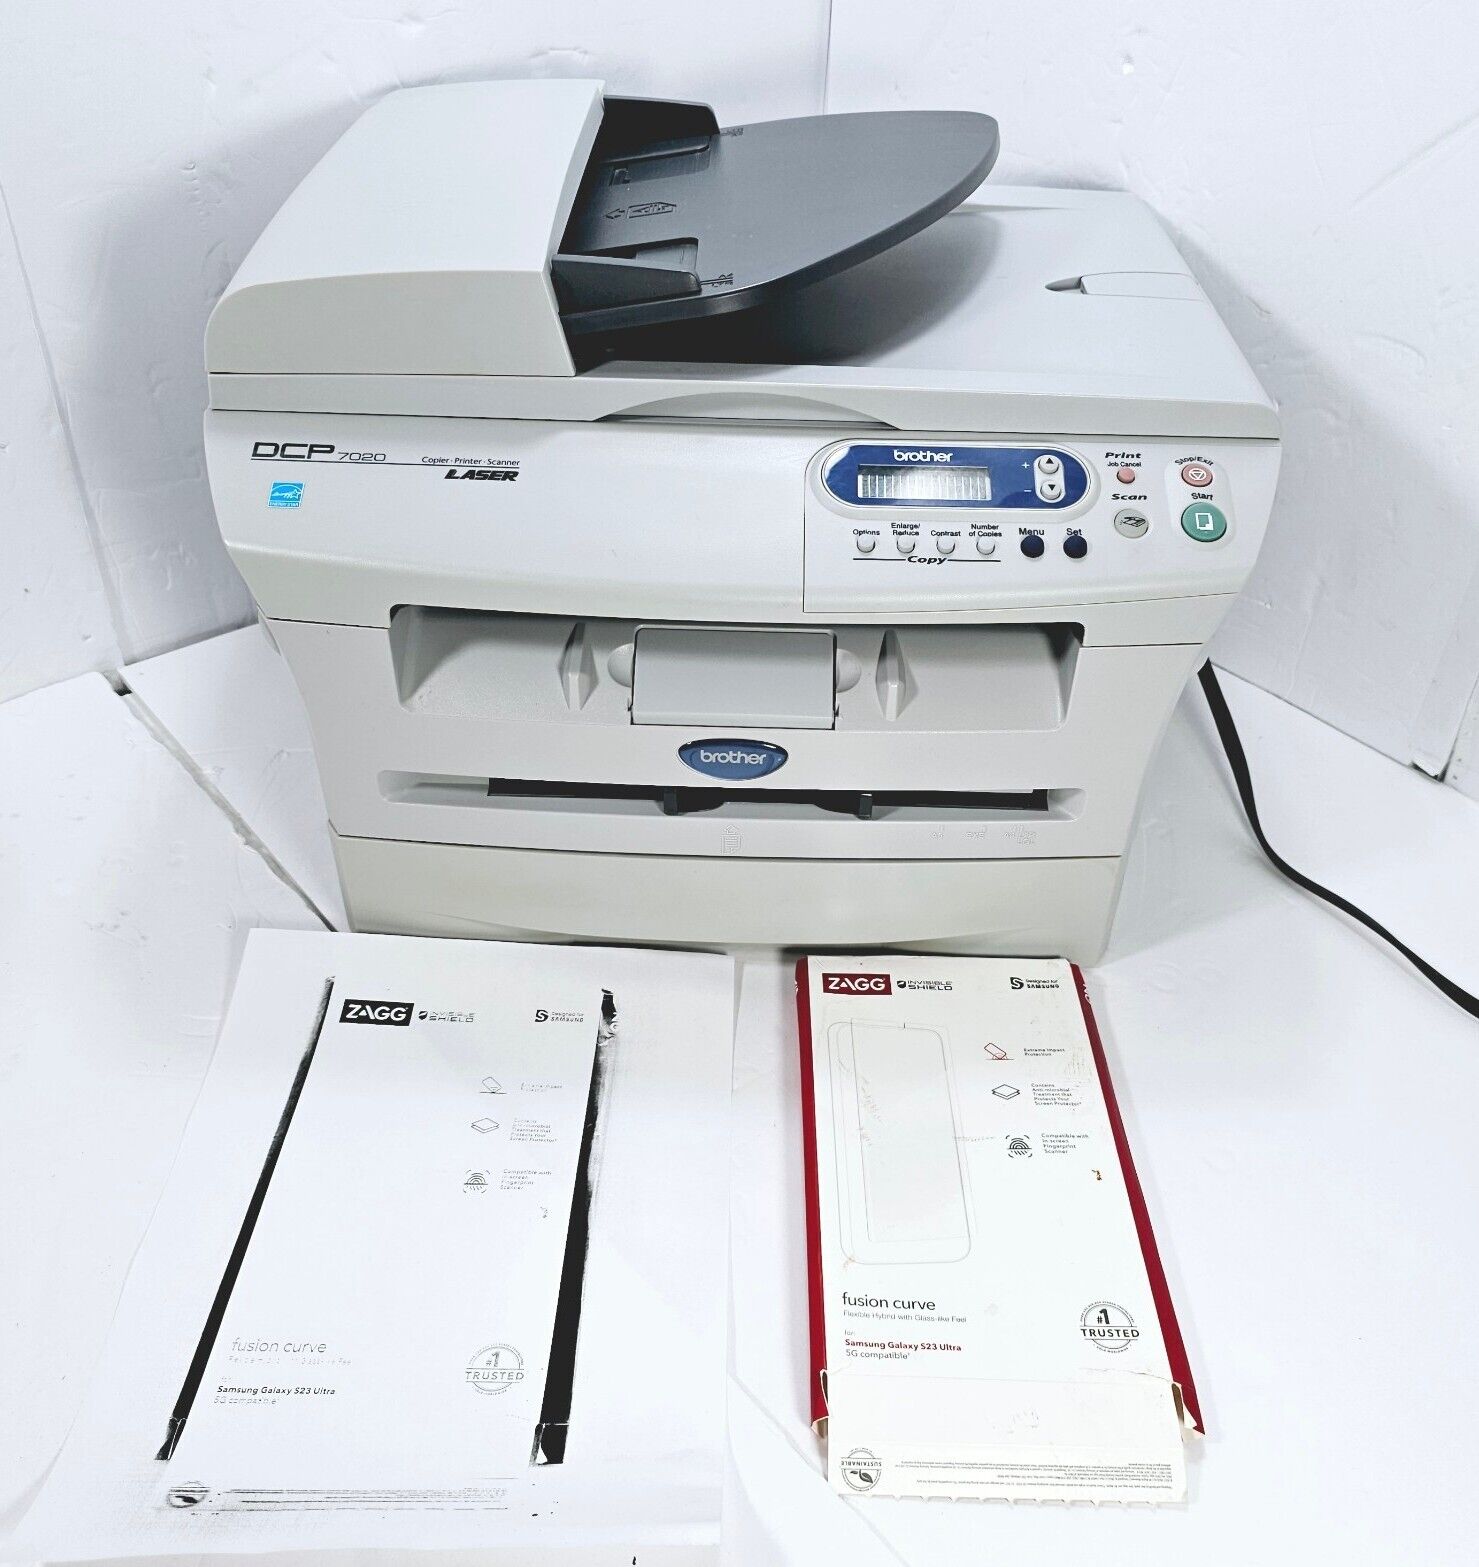 Brother DCP-7020 Laser Printer All-In-One Digital Copier Color Scan - Has Toner